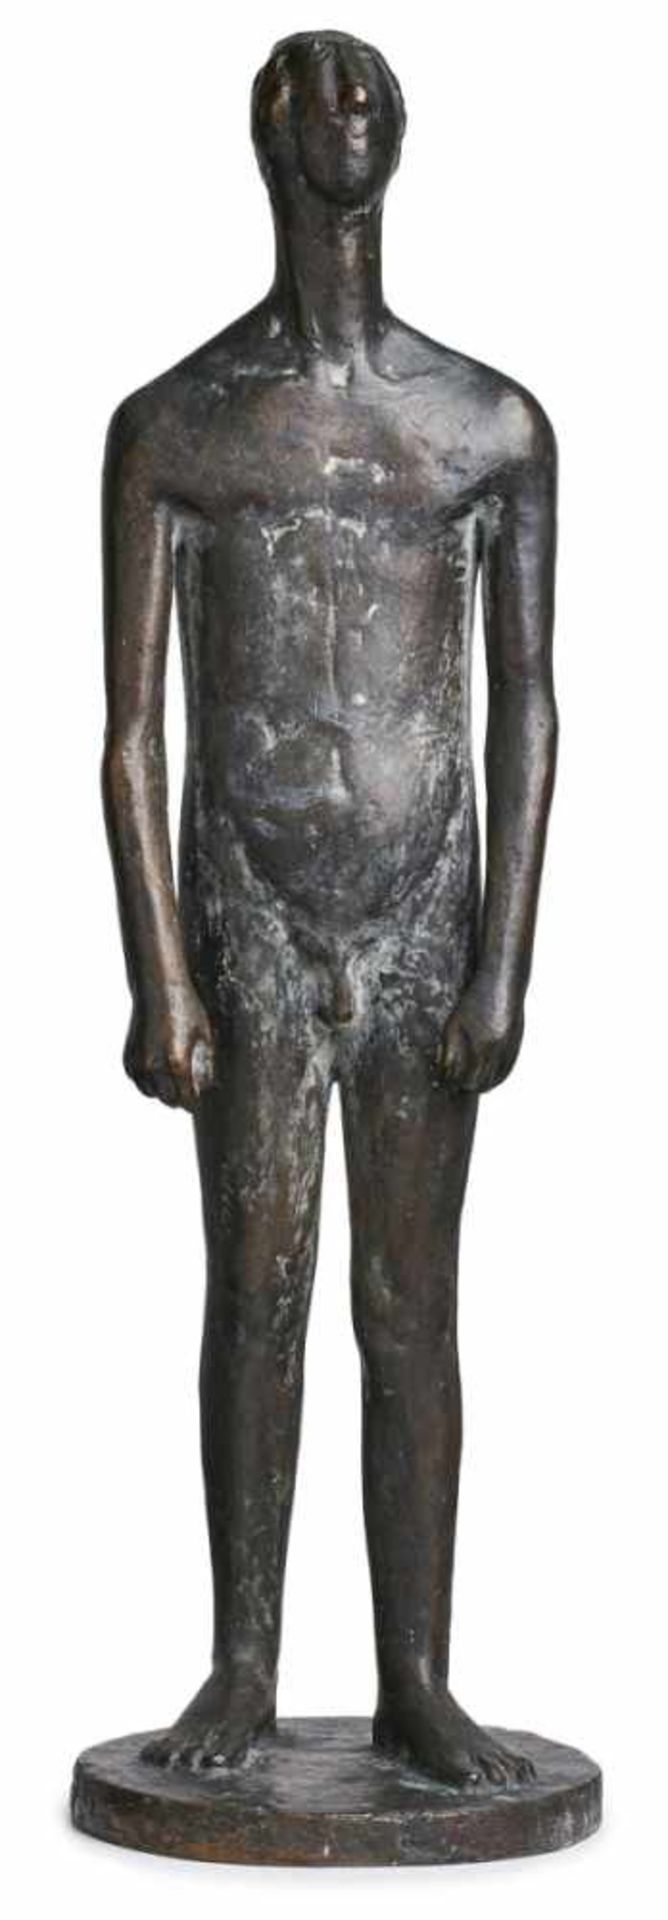 Gr. Bronze Hermann zur Strassen(geb. 1927 Frankfurt/ Main) "Verlorener Sohn", dat. 1958. Dunkelbraun